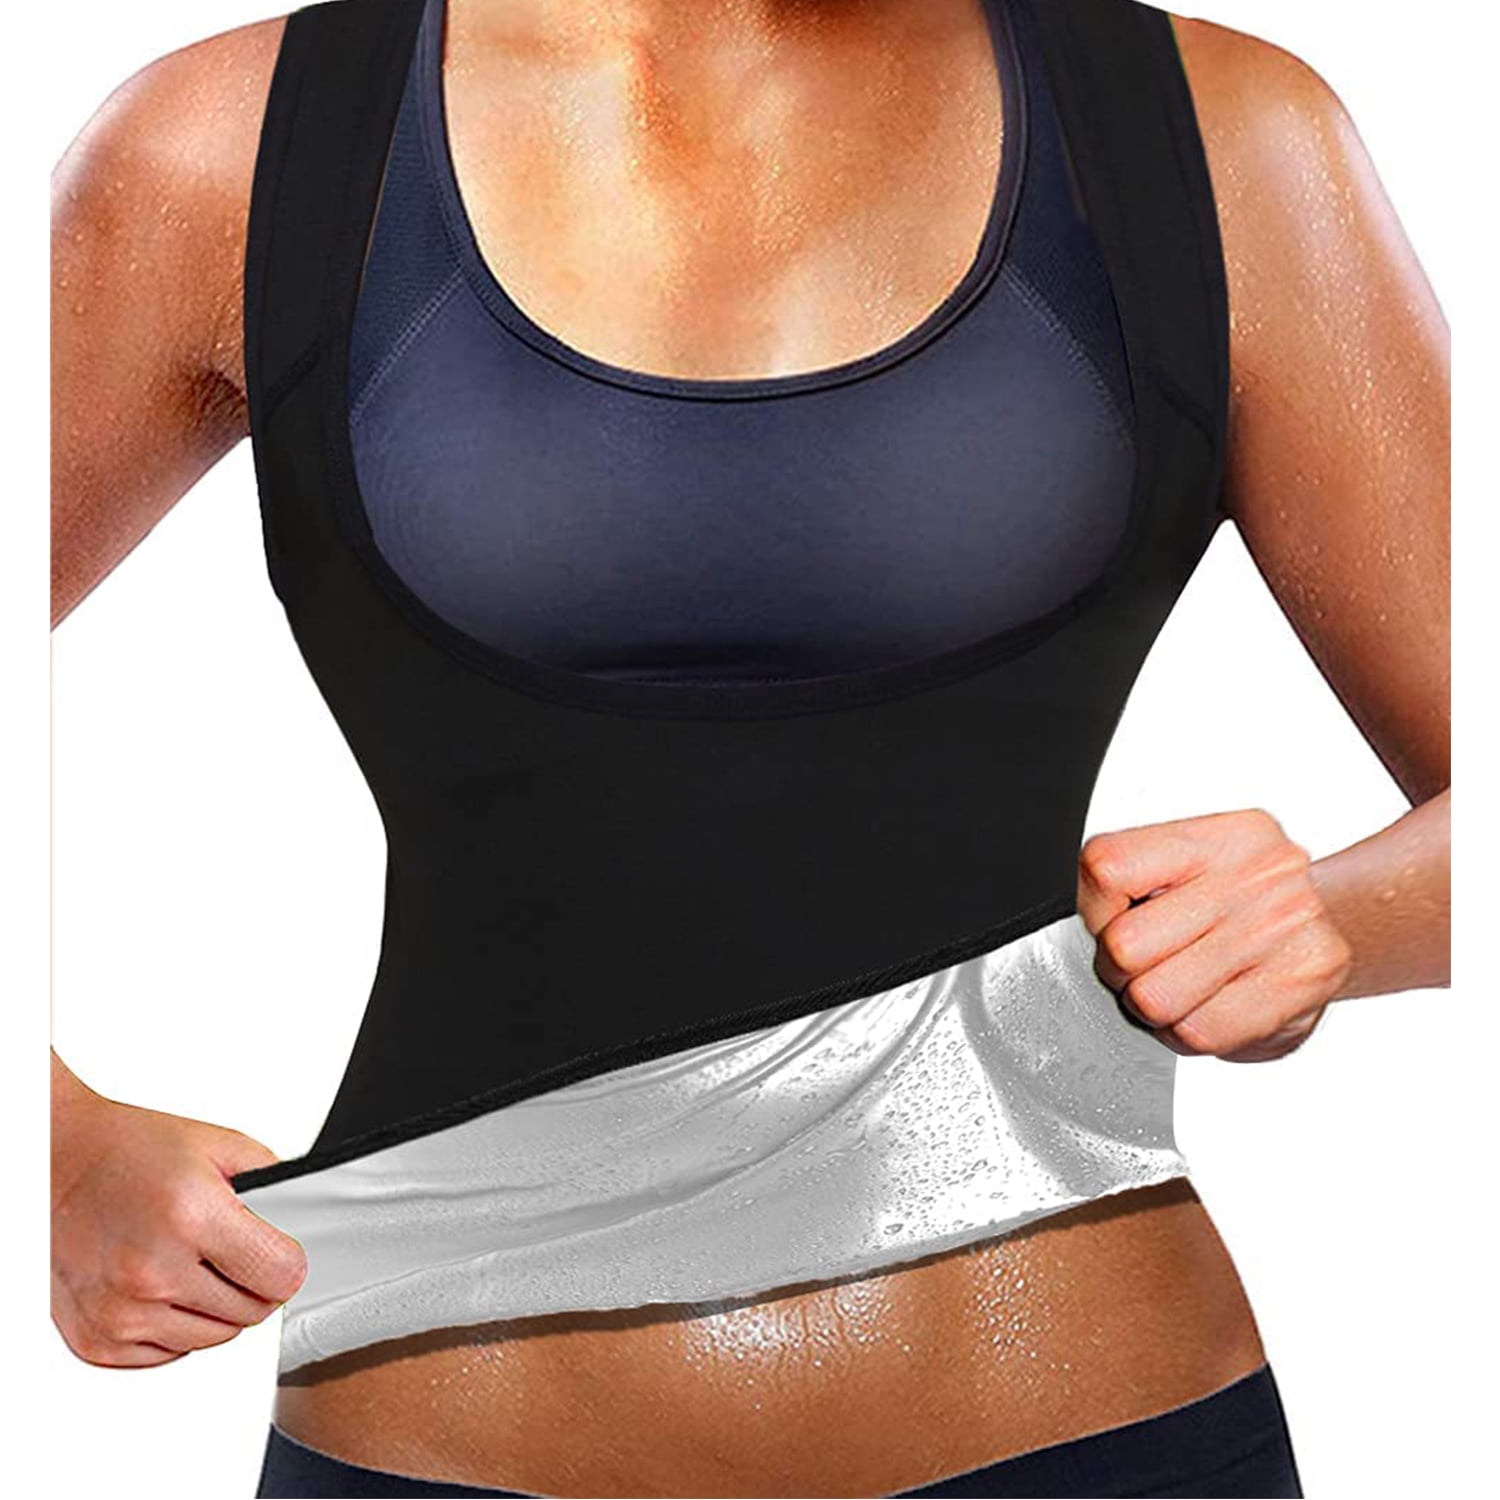 Details about   Women Neoprene Sweat Vest Hot Sauna Suit Muscle Training Fitness Jacket Gym Wear 